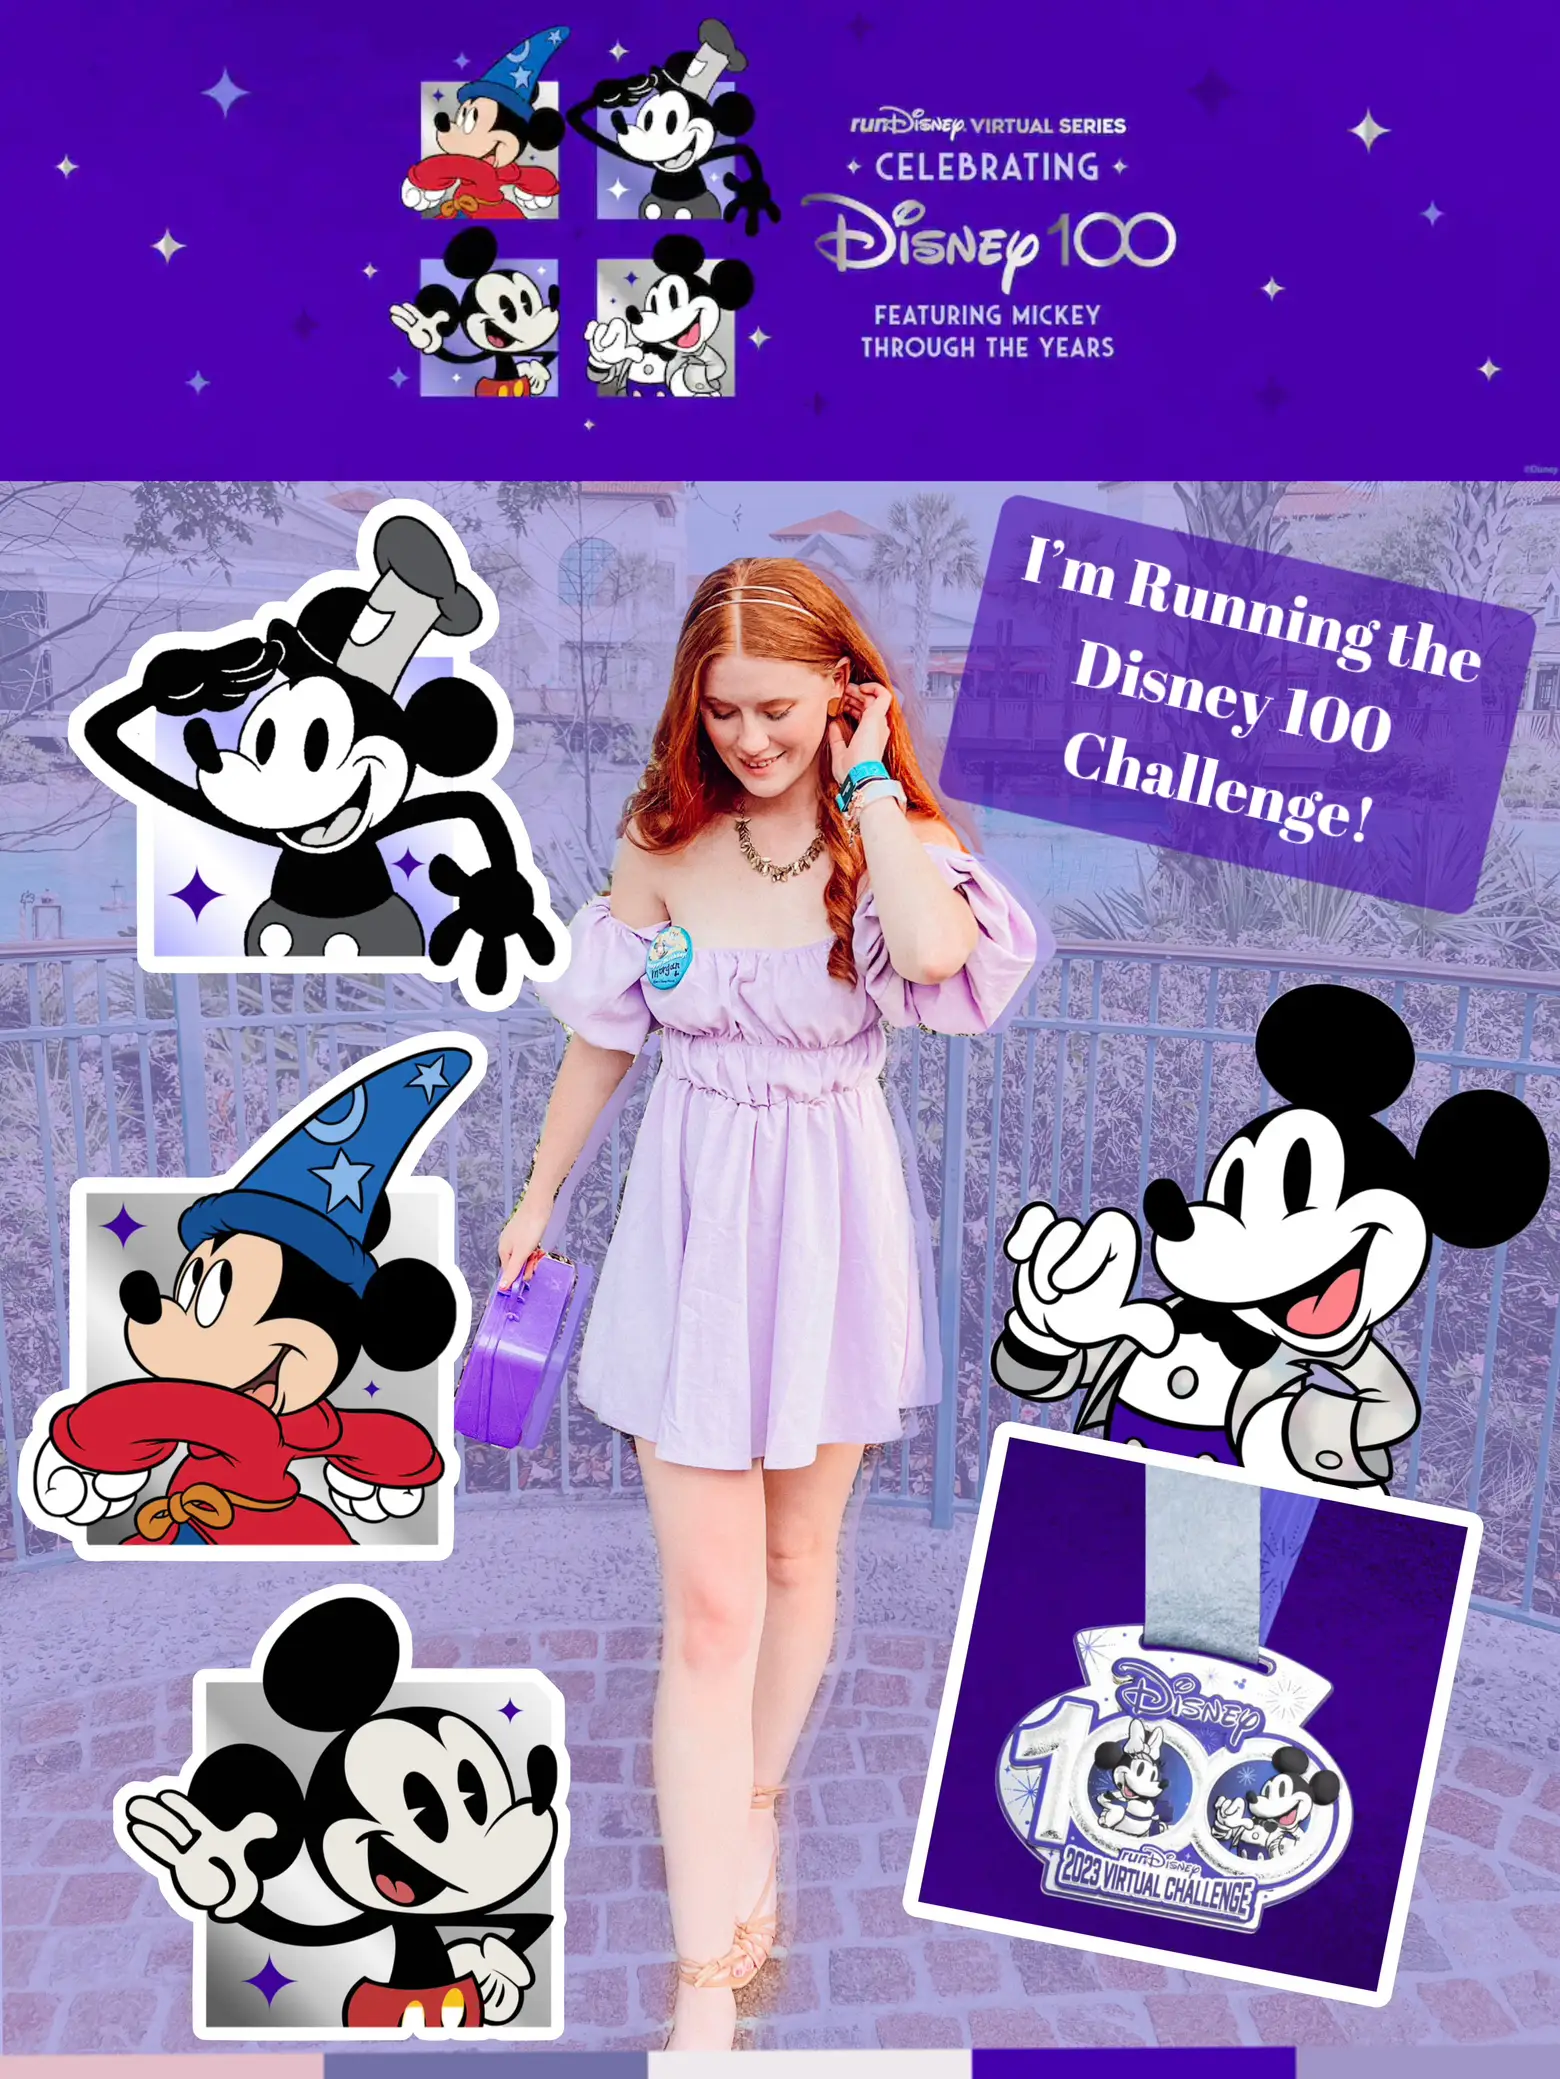 Celebrate Disney100 Featuring Mickey During the 2023 runDisney Virtual  Series